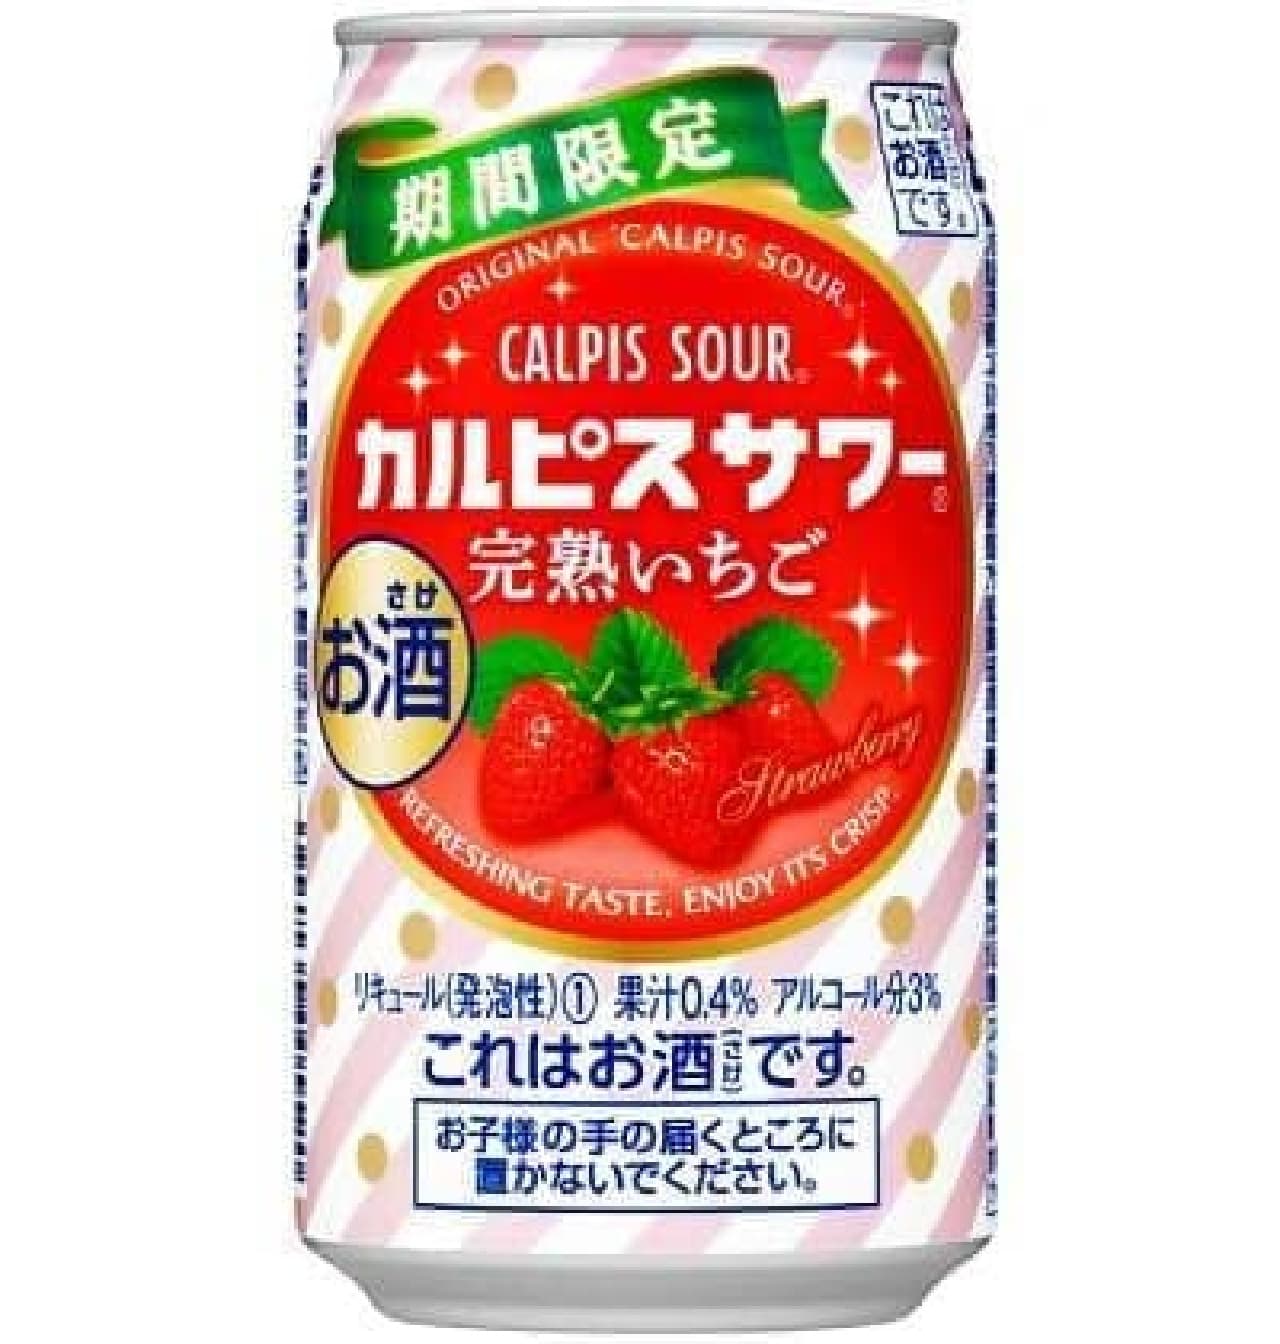 "Ripe strawberries" for Calpis sour!